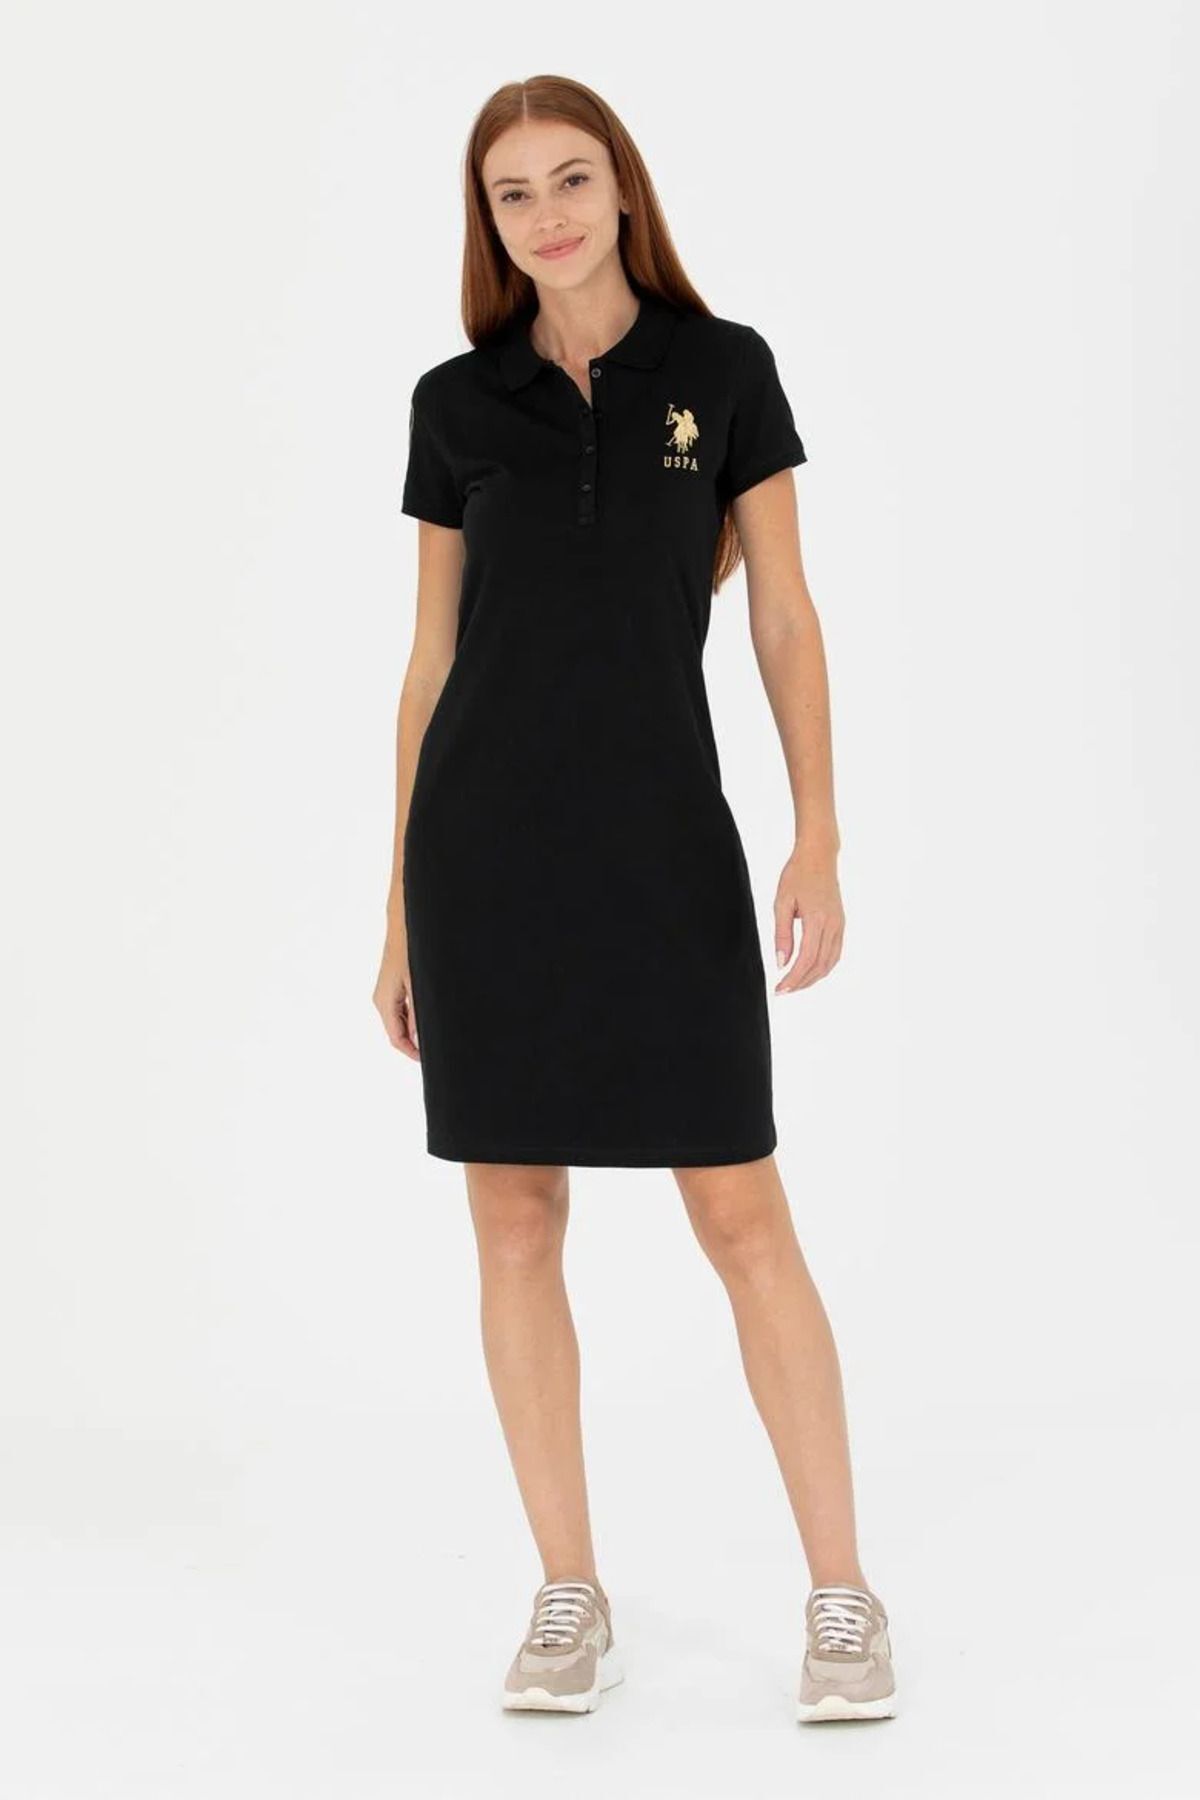 U.S. Polo Assn. Kadın Siyah Örme Elbise 1567905 LAPATYA